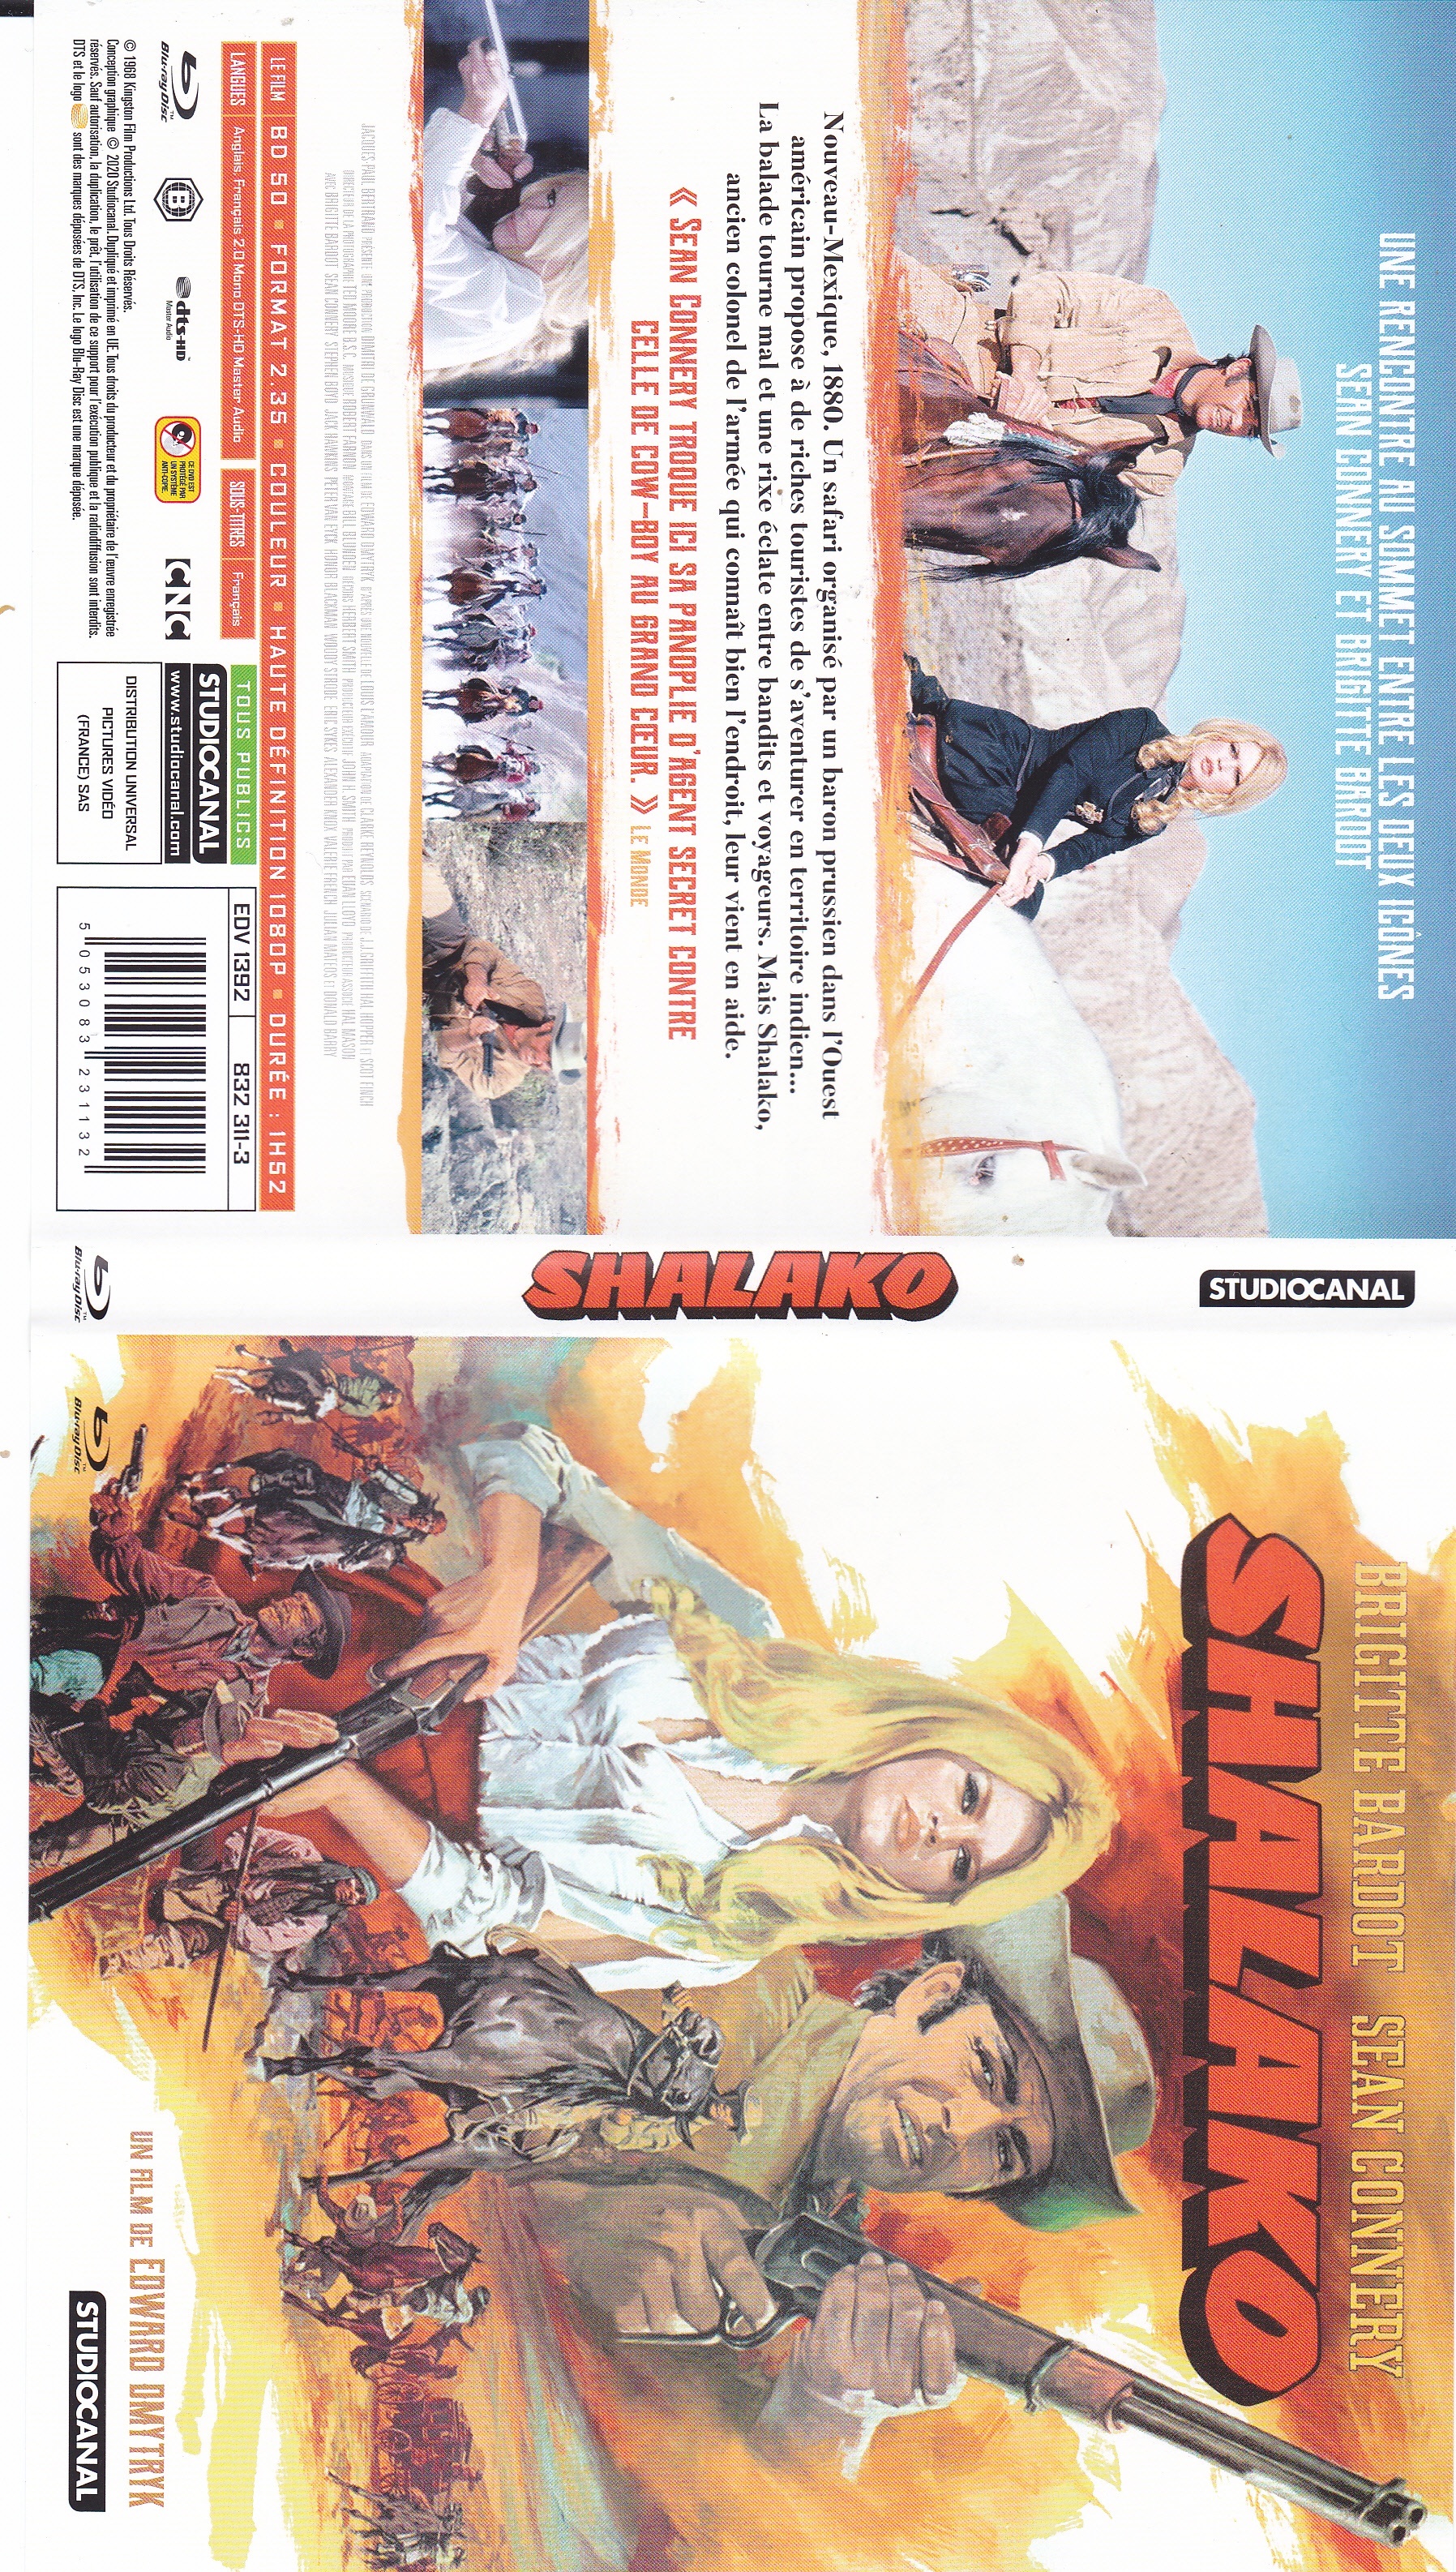 Jaquette DVD Shalako (BLU-RAY)